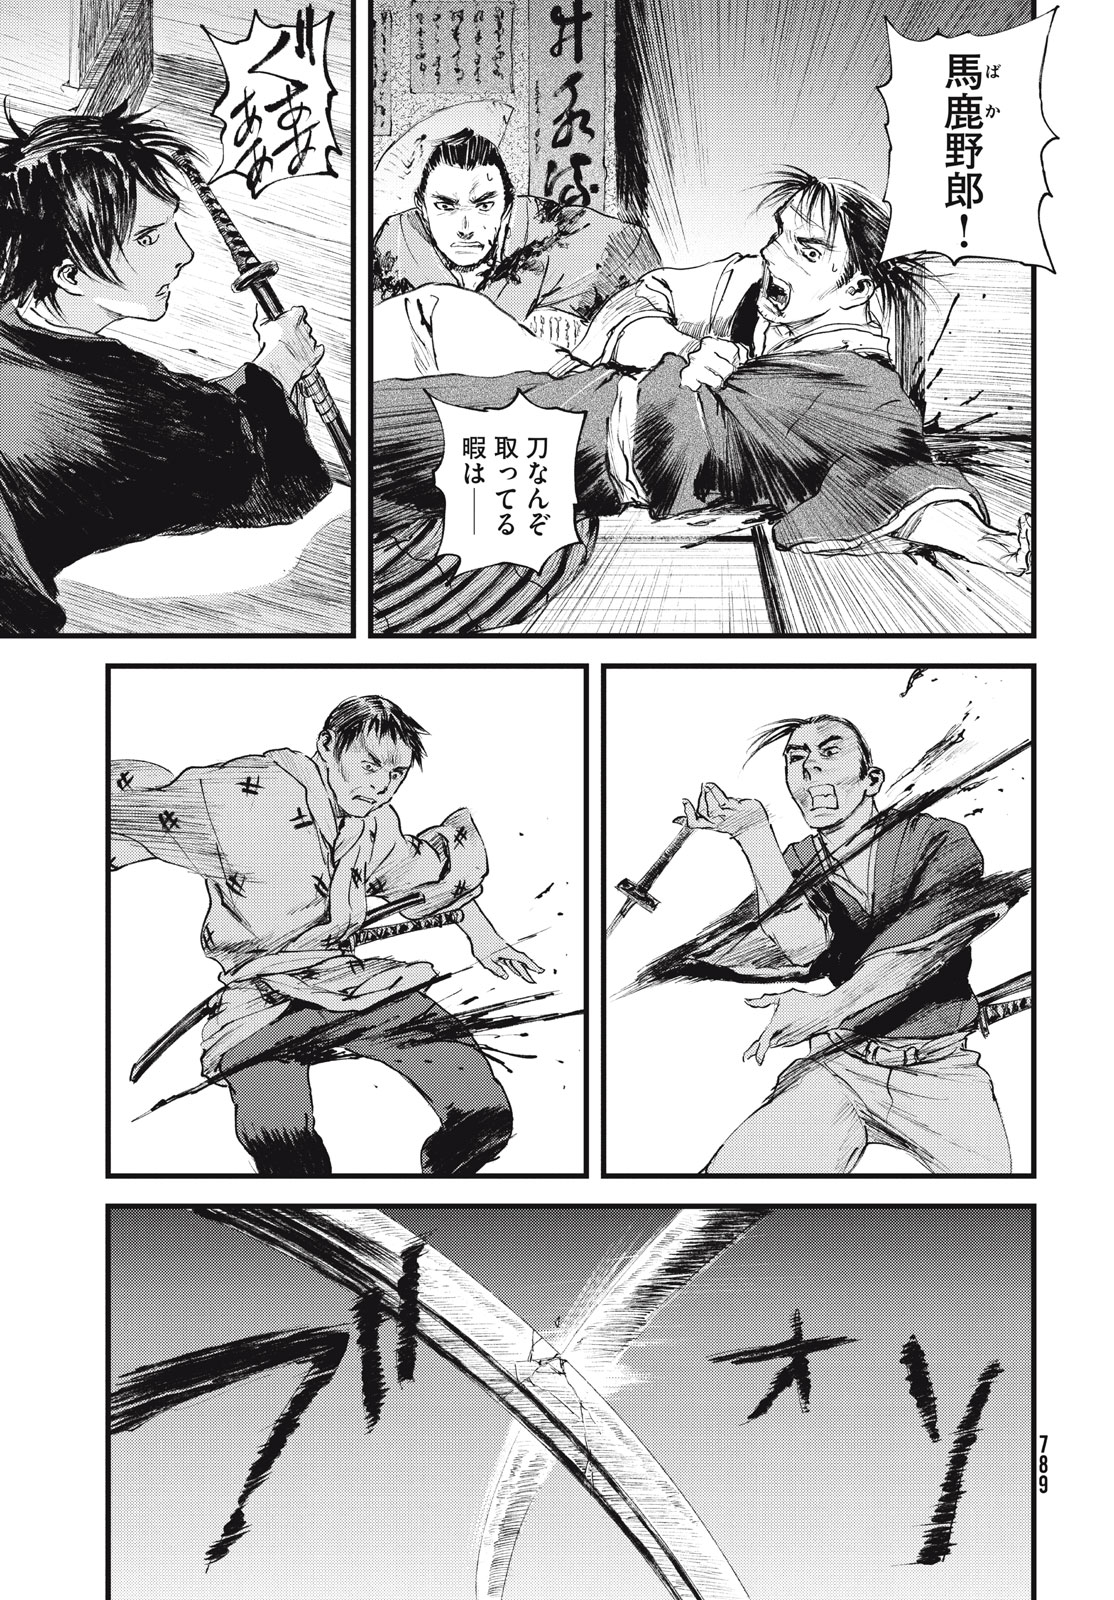 Blade of the Immortal: Bakumatsu Arc - Chapter 55 - Page 7